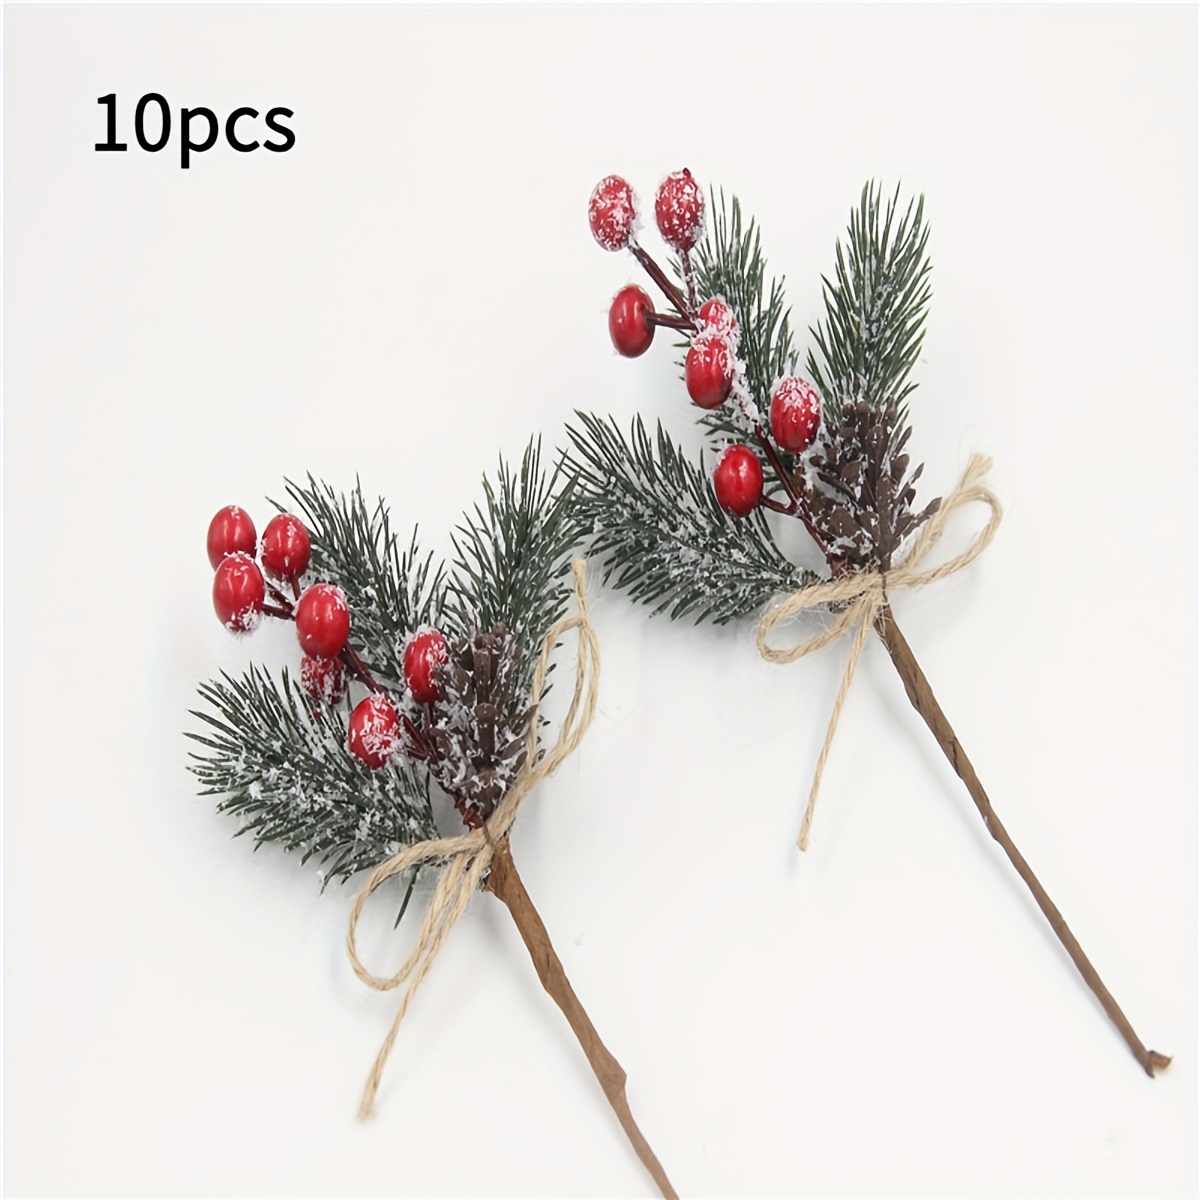 10pcs Artificial Christmas Picks Branches, Christmas Berries Red Berry  Stems Pine Branches, Christmas Greenery Picks, Winter Foral Picks Holly  Stem Ar